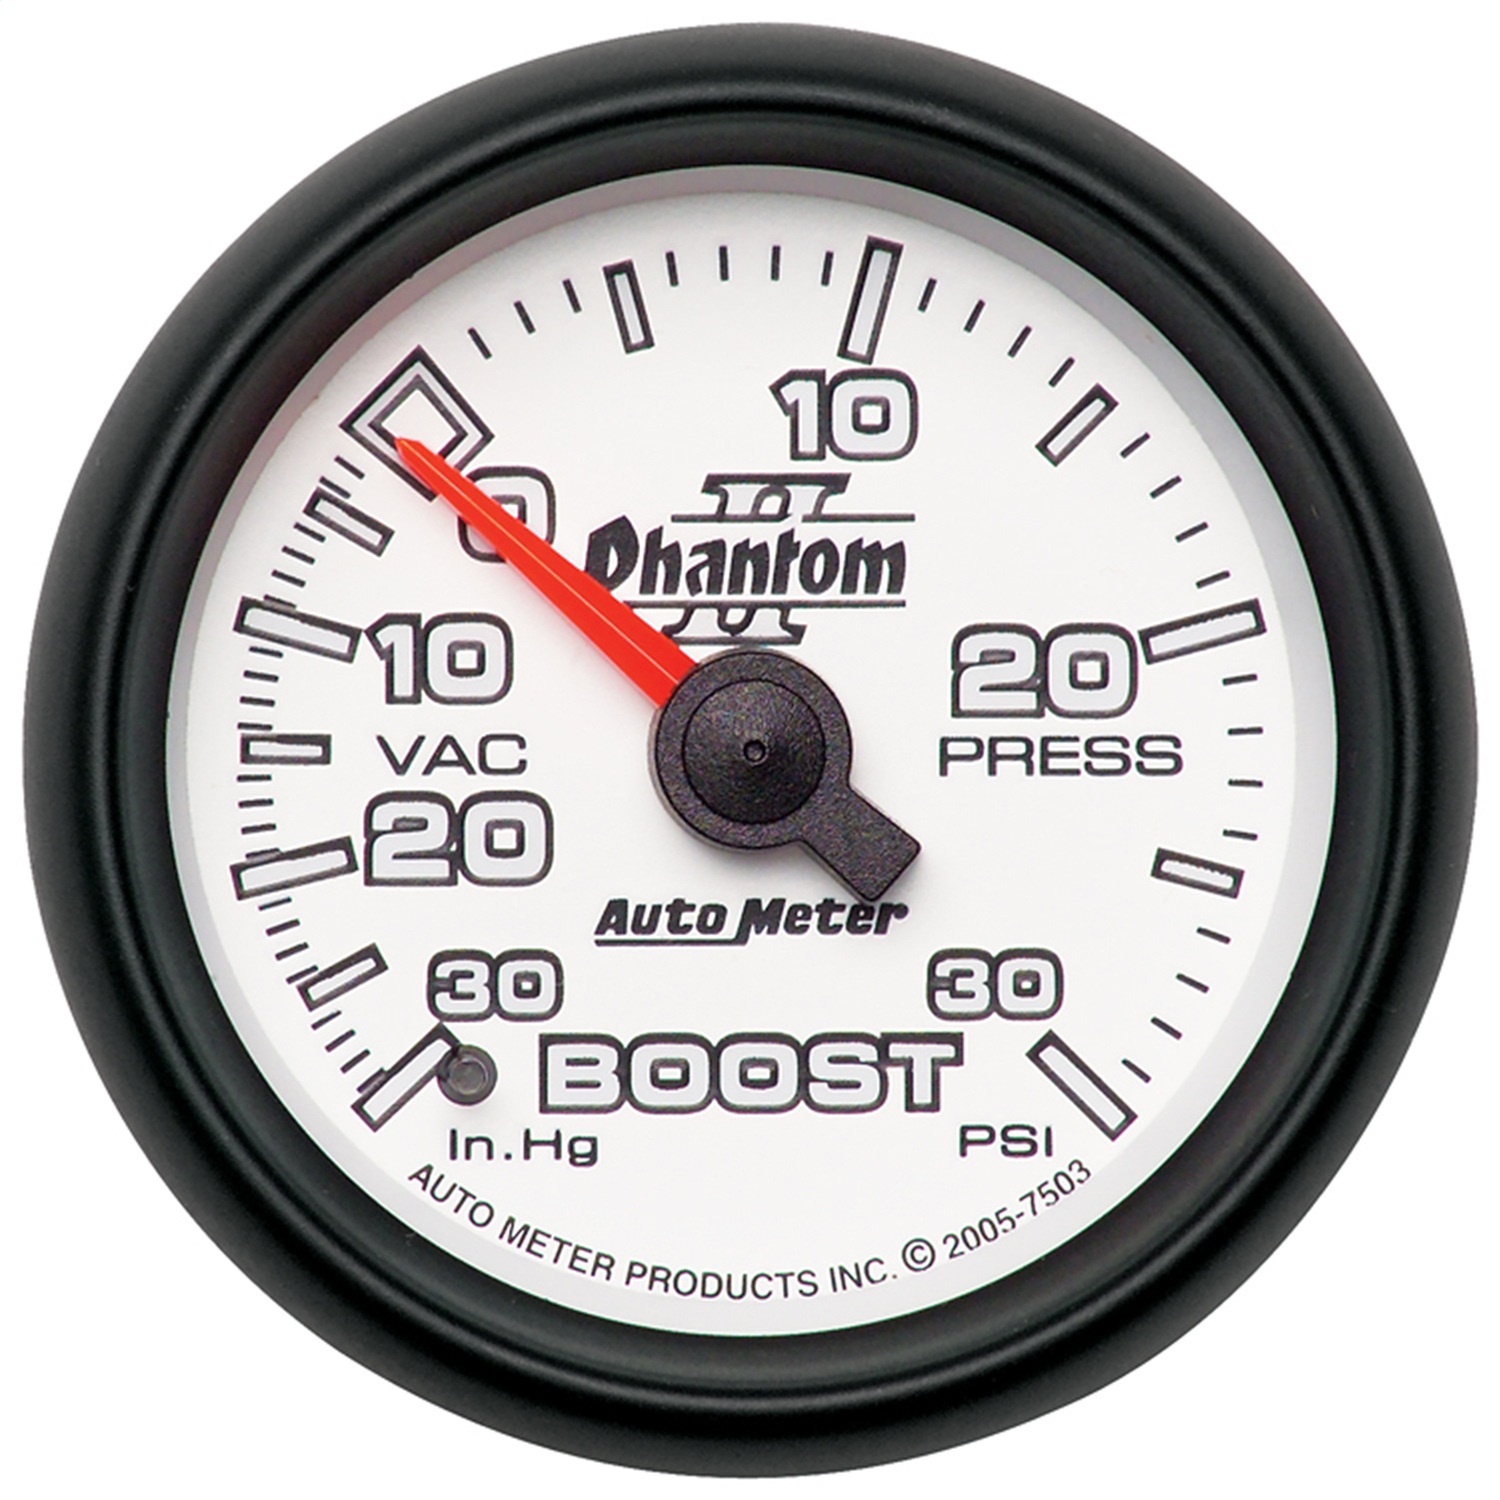 Auto Meter Auto Meter 7503 Phantom II; Mechanical Boost/Vacuum Gauge